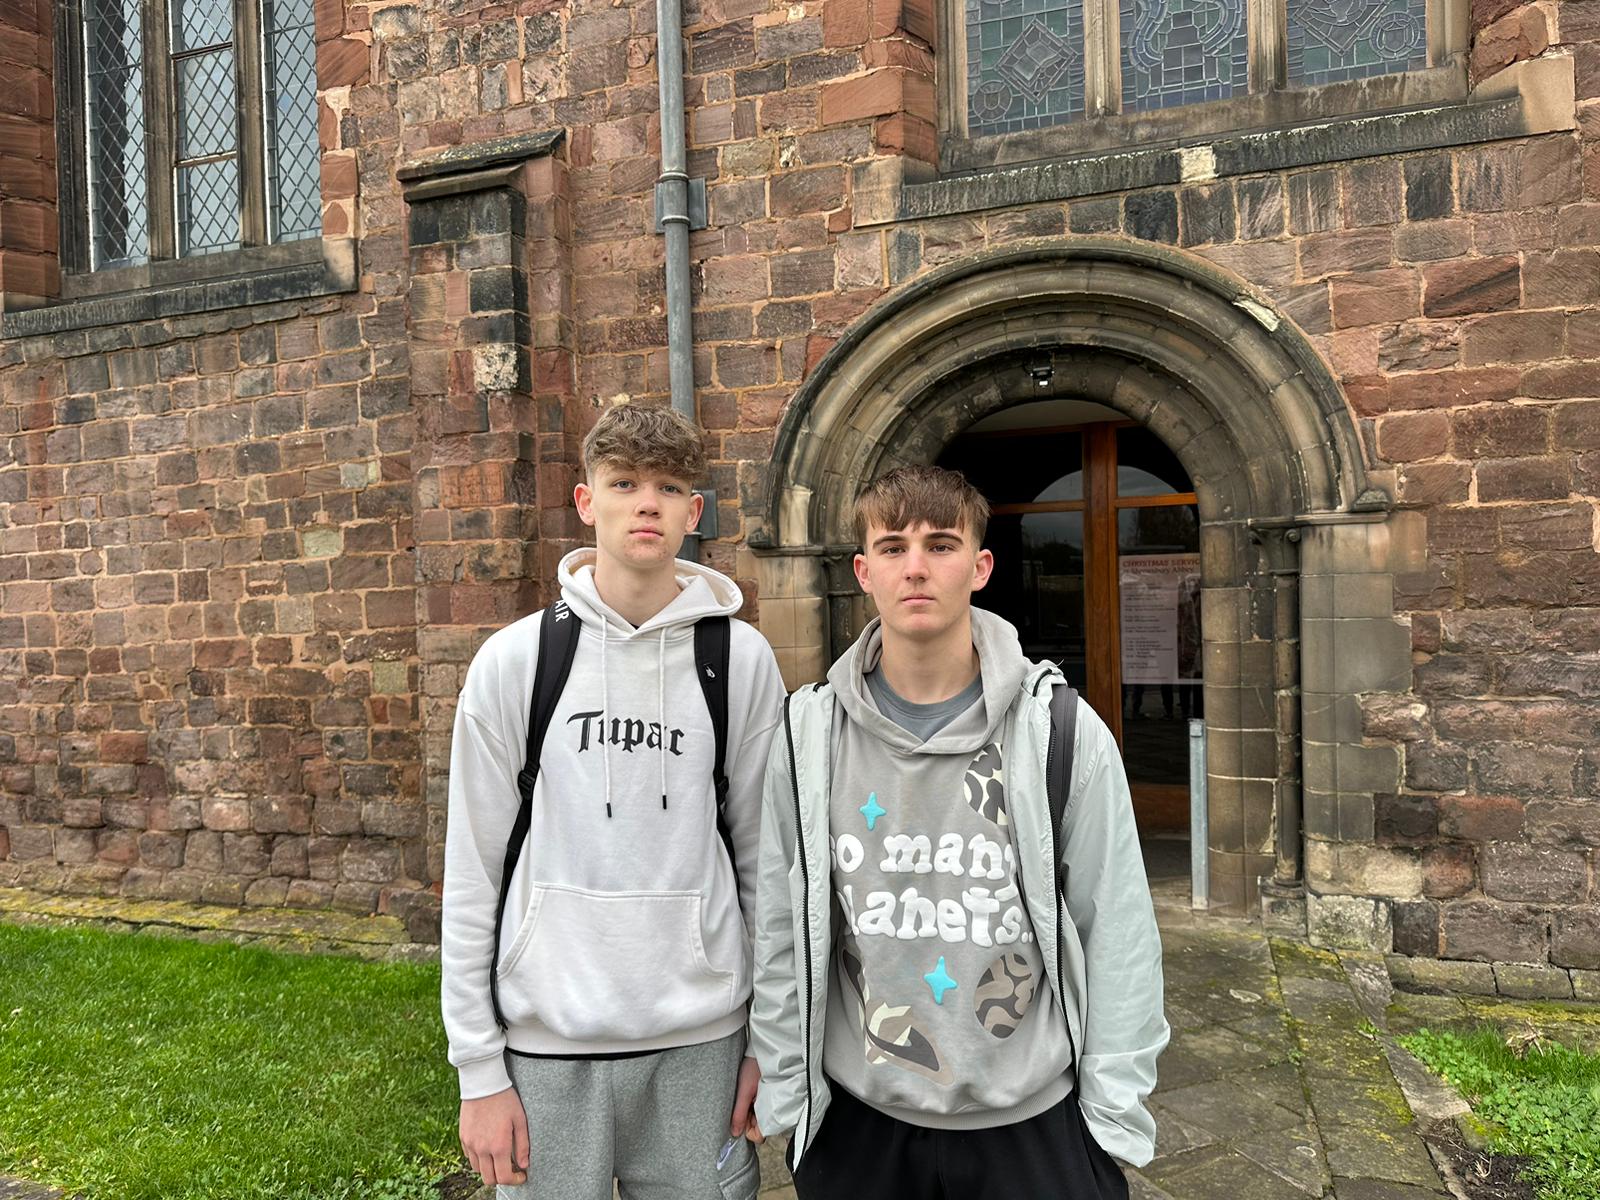 Joe Goody and Paul Rowson left tributes at Shrewsbury Abbey